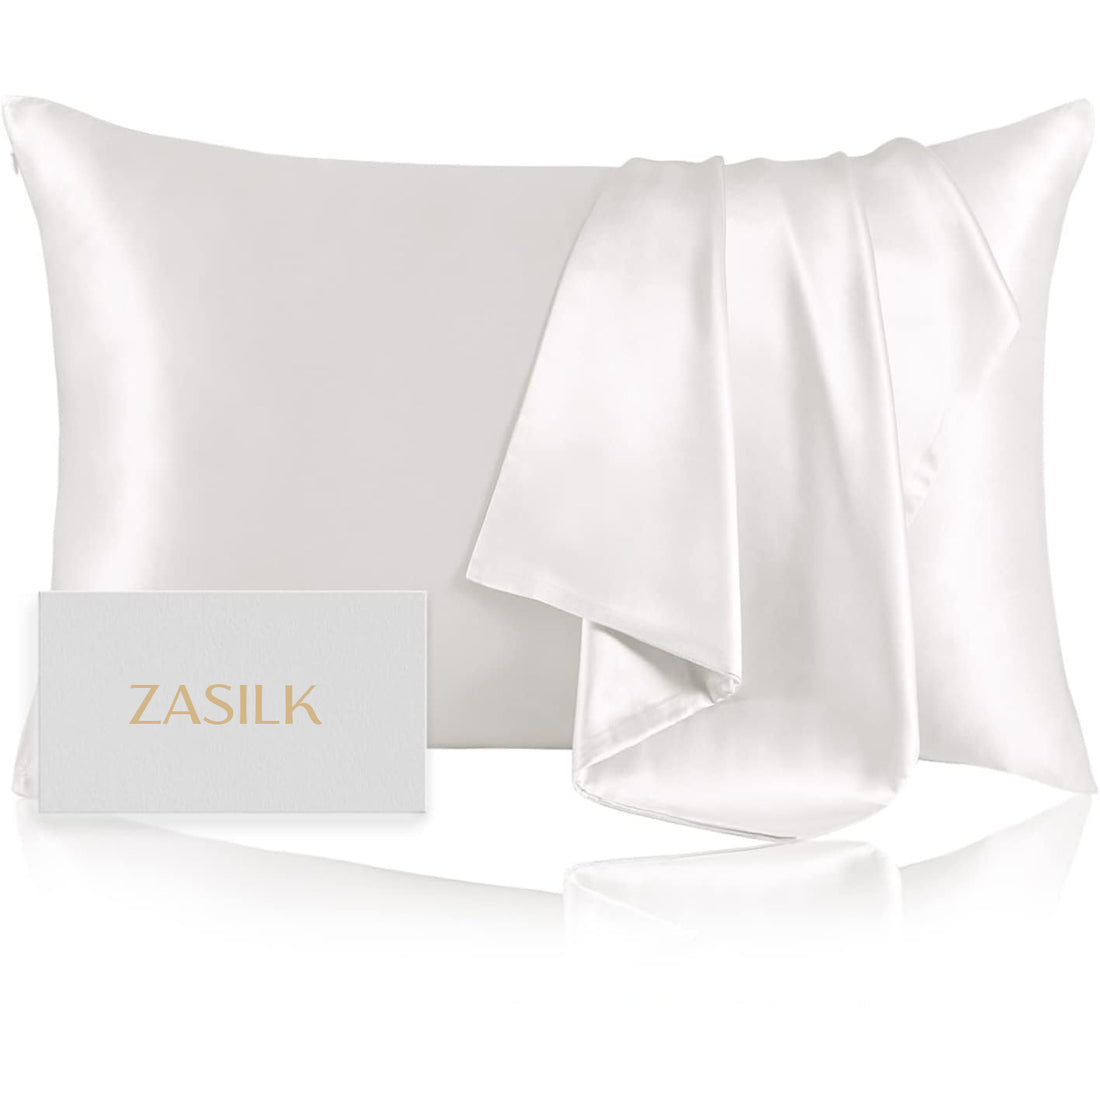 ZASILK White Pure Silk Pillowcase Range - Enhancing Beauty Sleep with Silk Elegance